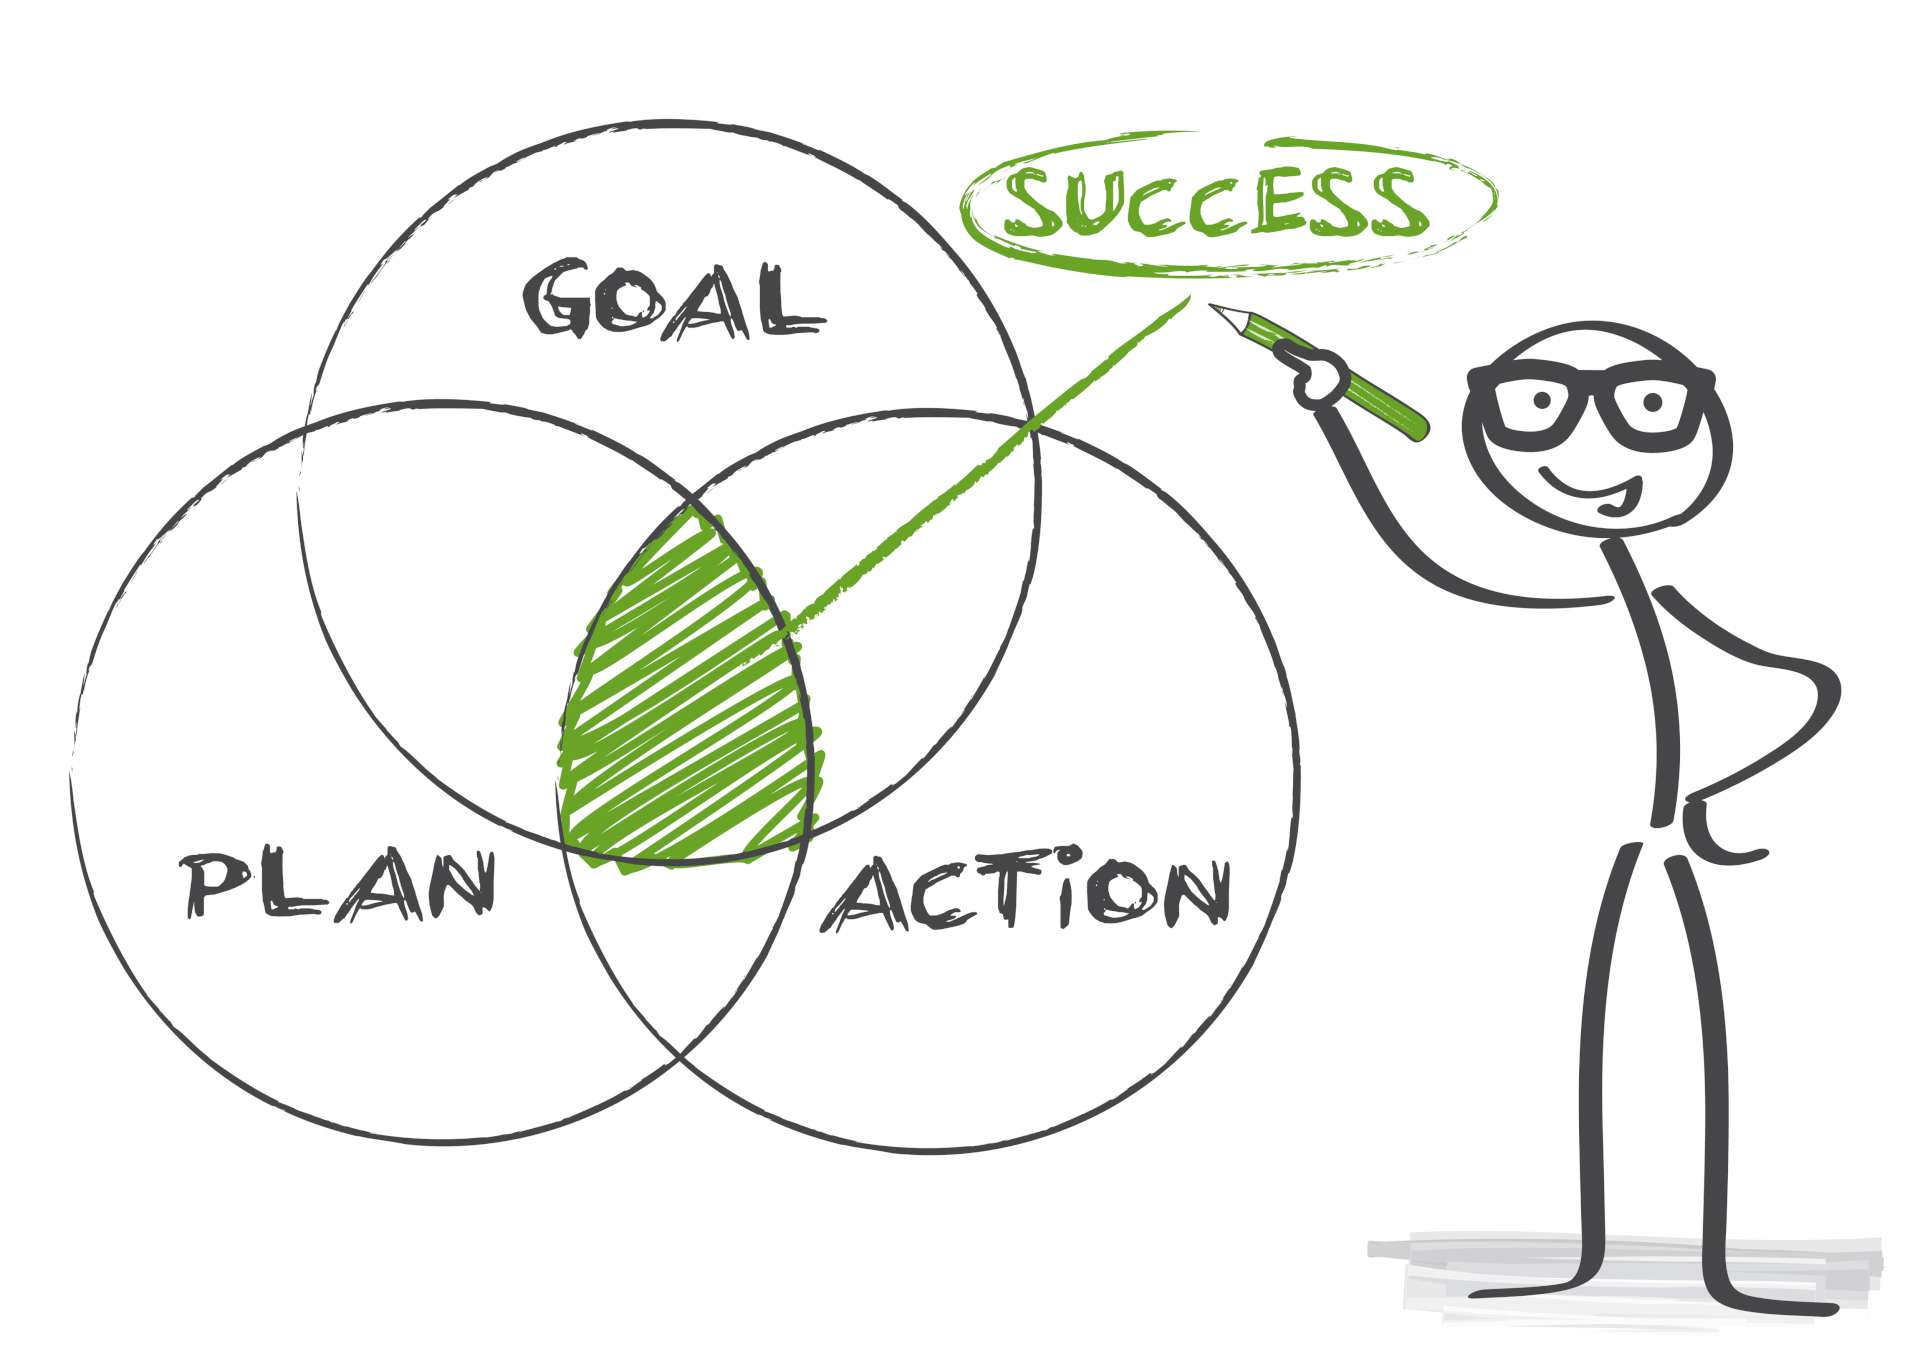 My action plan getting ready for the. Постановка целей. Планирование целей картинки. Цель картинка. Goal Plan Action.